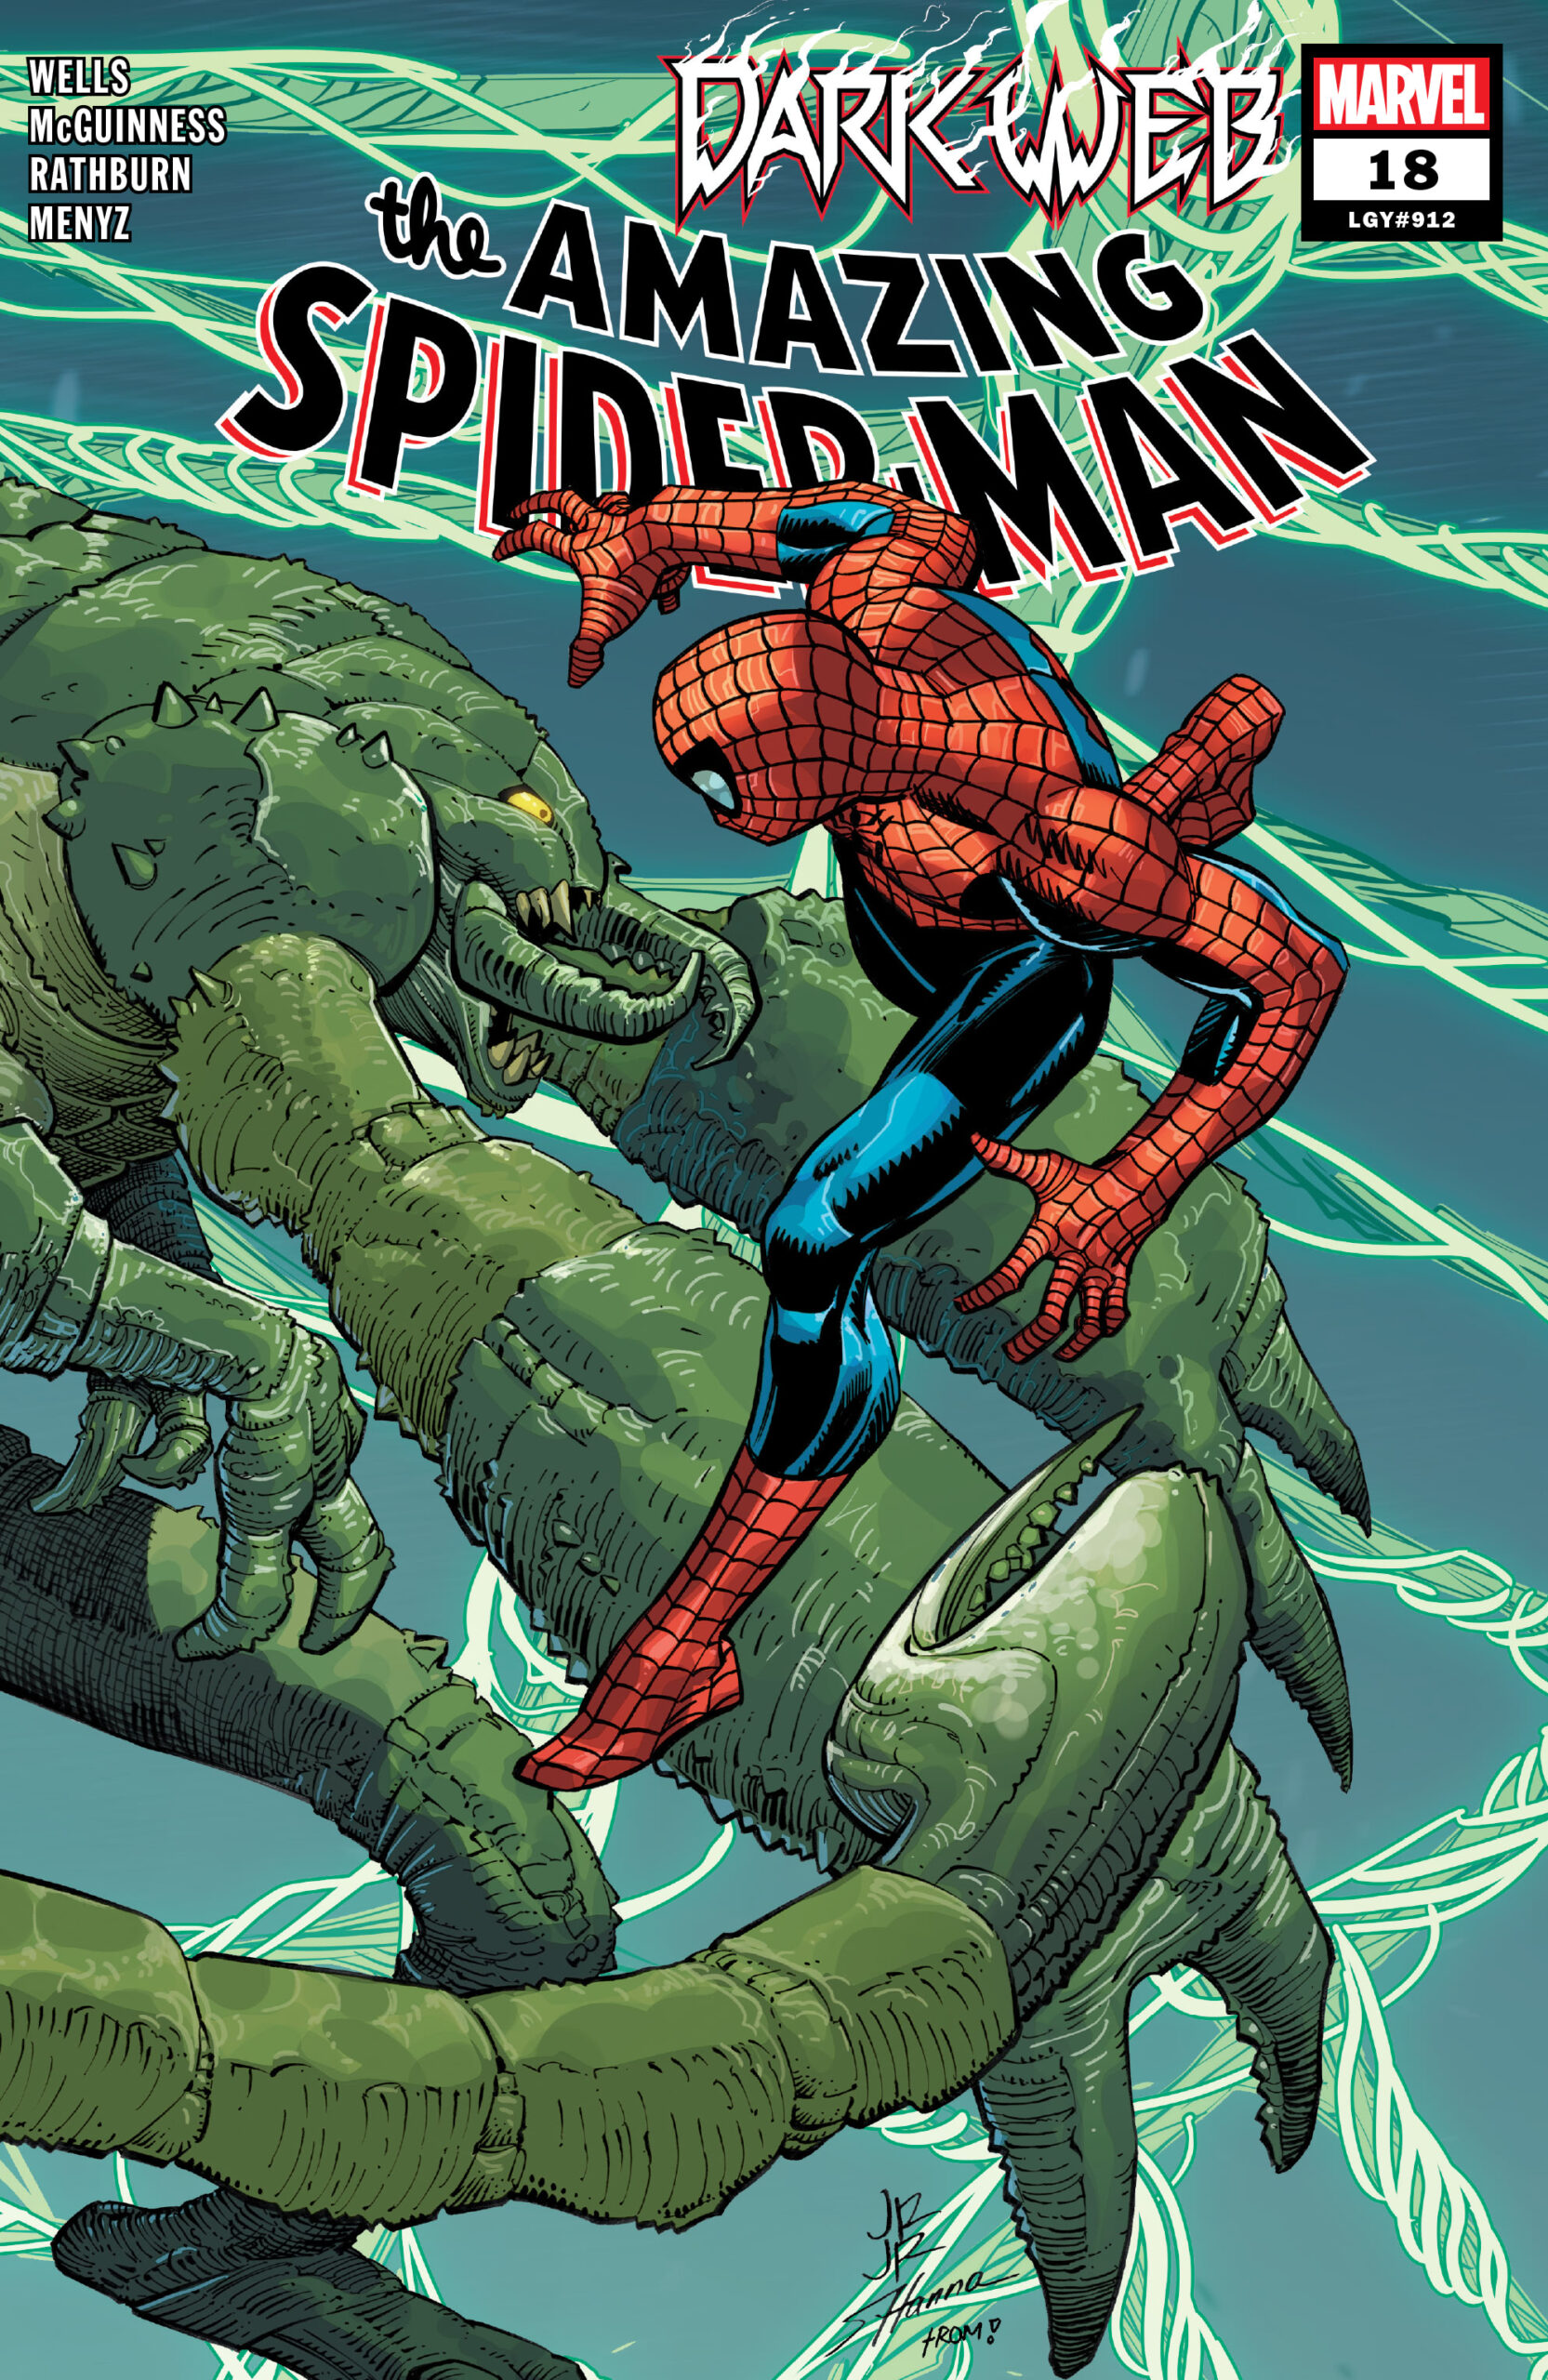 Amazing Spider-Man #18 spoilers 0-1 Dark Web